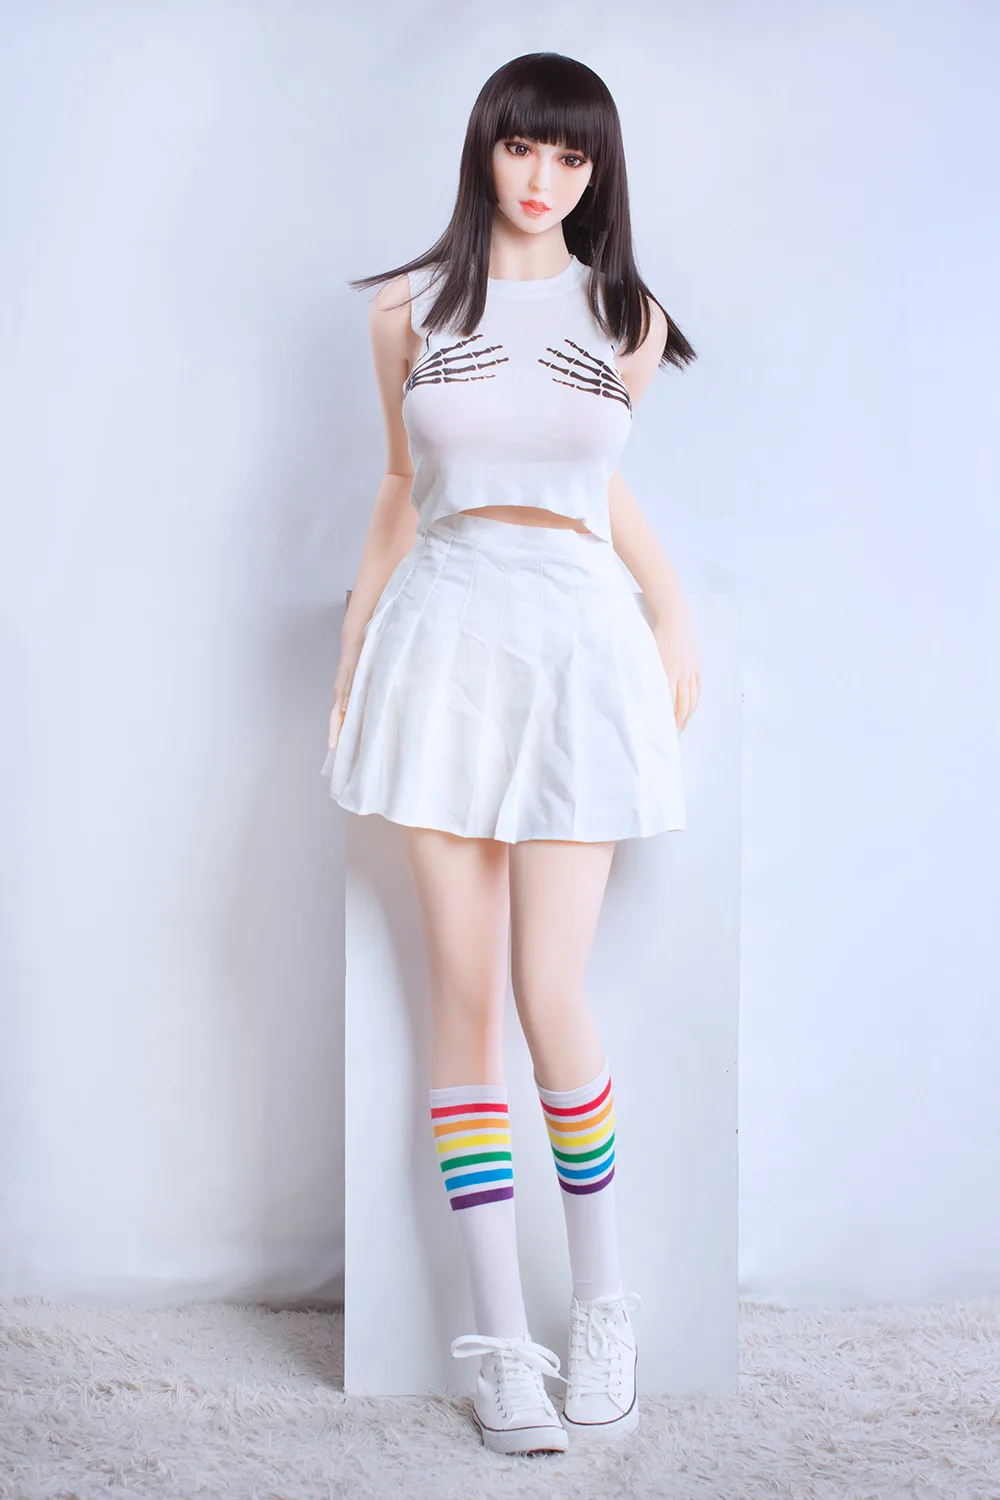 japanese tpe 168cm realistic ladyboy sex toy big